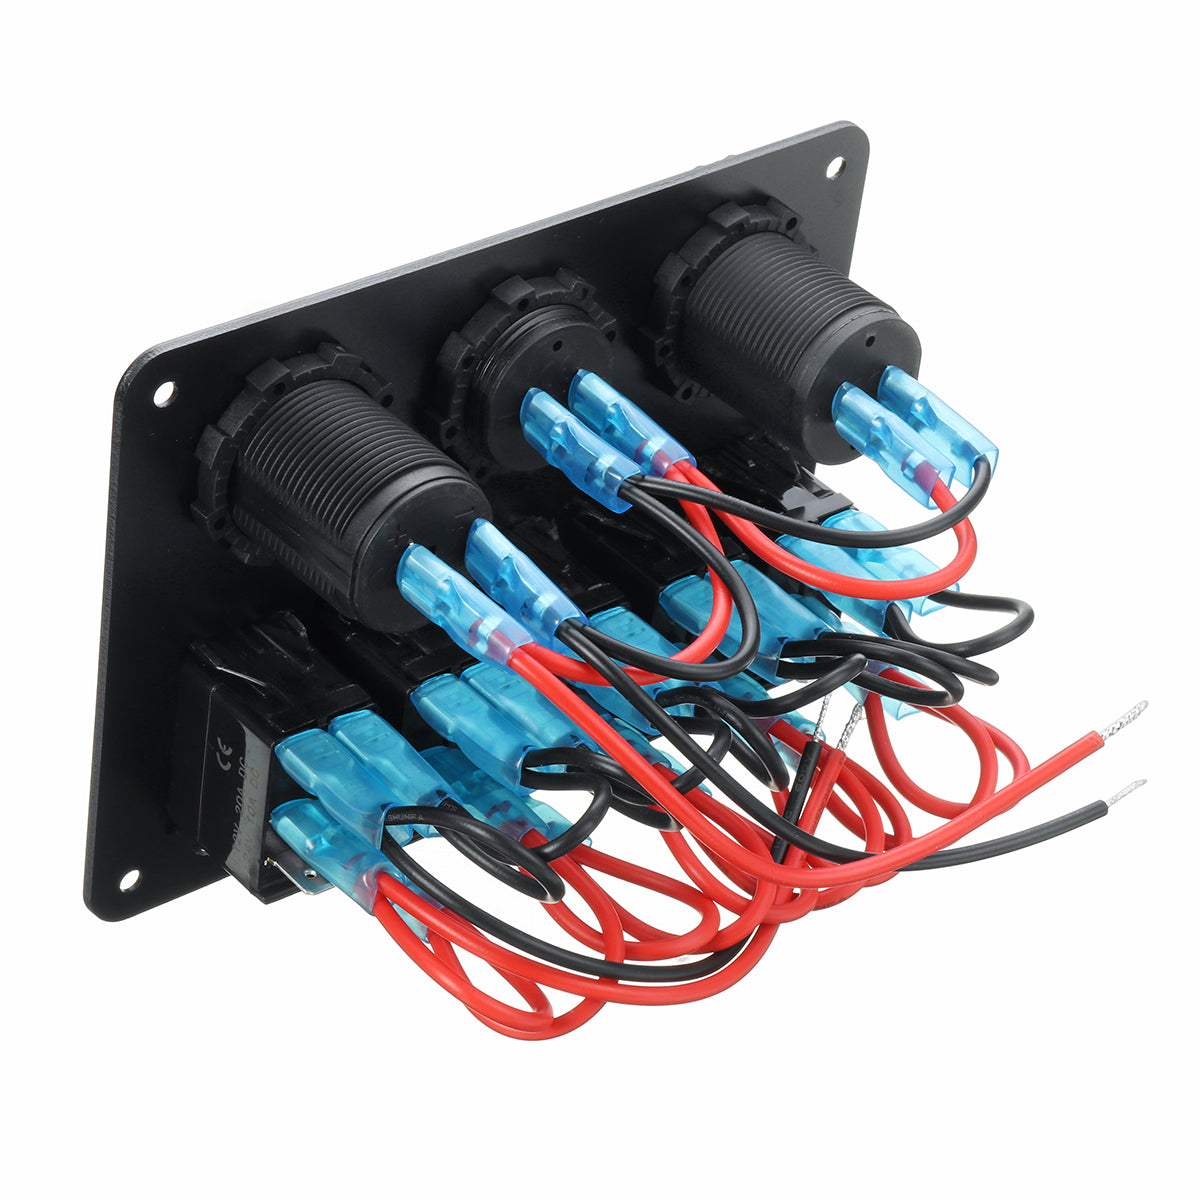 Black 5 Gang On-Off Blue LED Toggle Switch Panel Voltmeter Dual USB Car Boat Marine